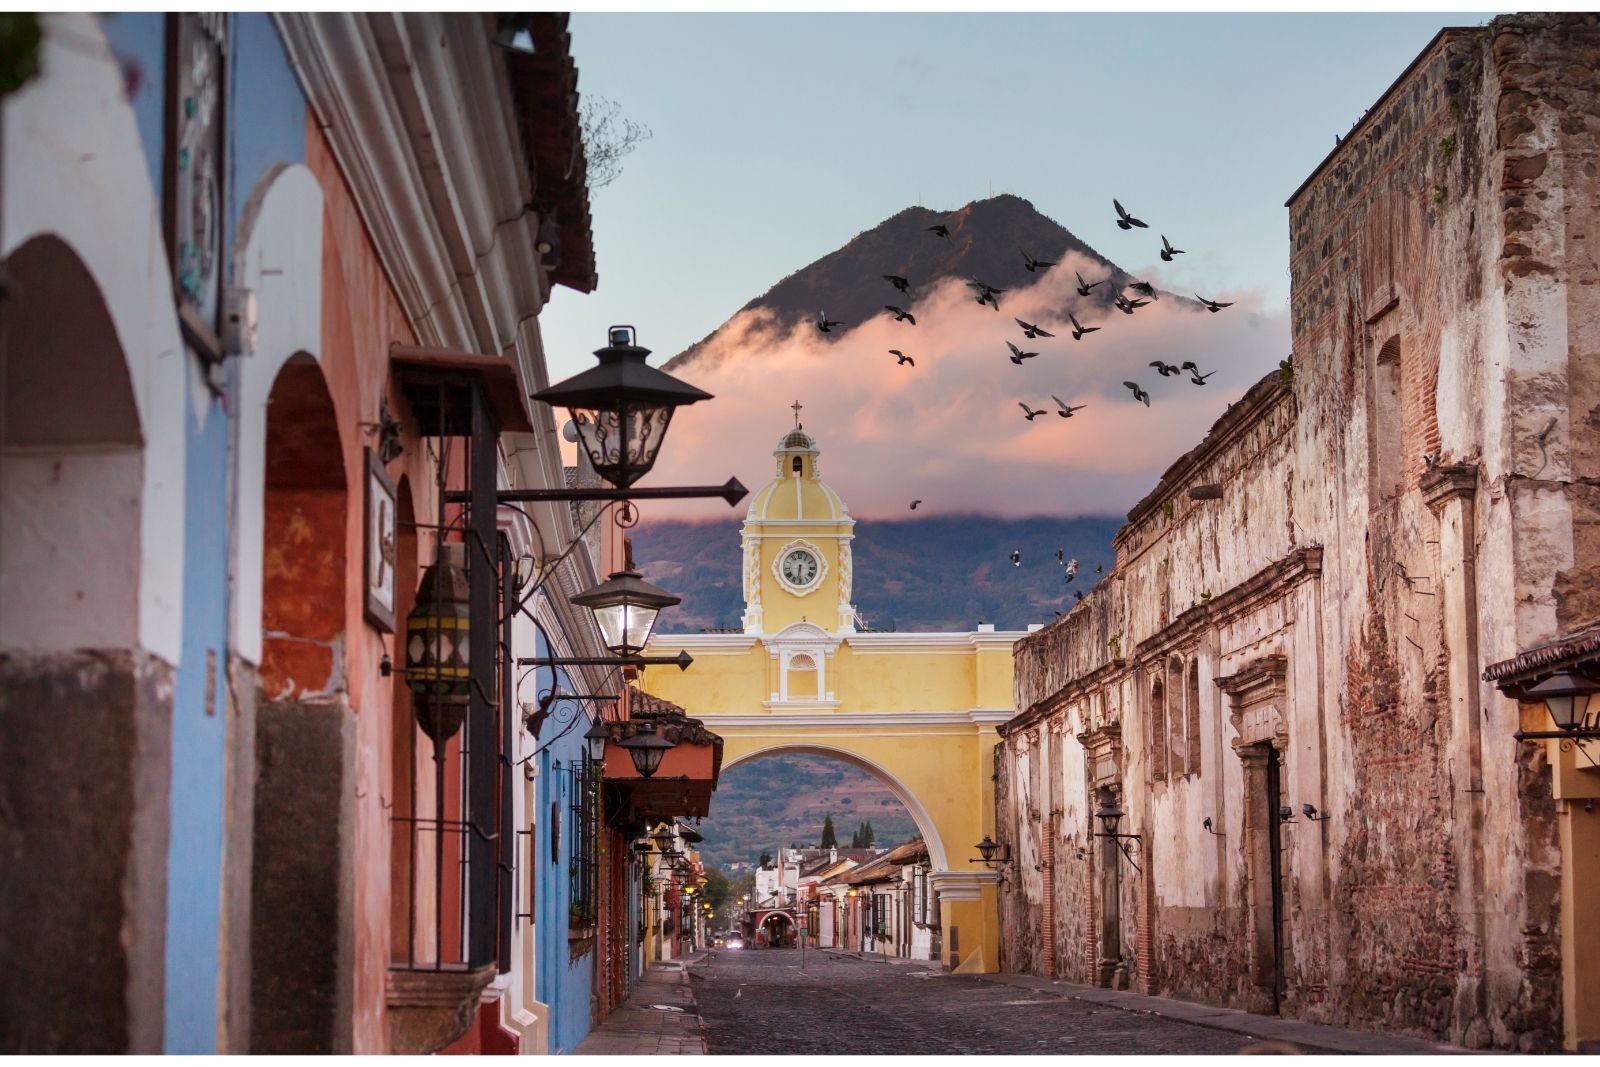 City of Antigua, Guatemala